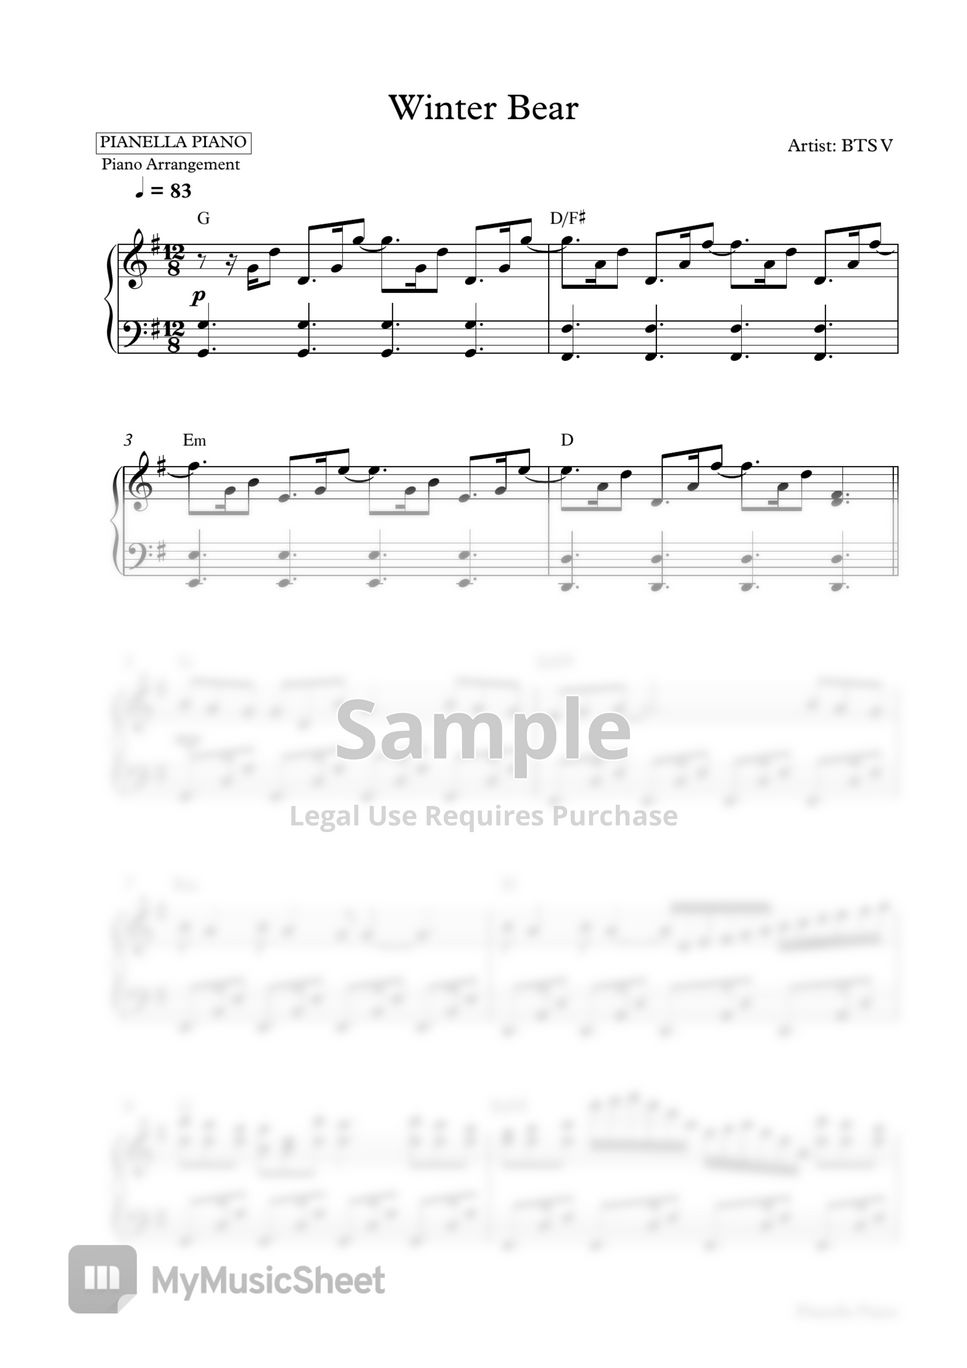 BTS V - Winter Bear (Piano Sheet) by Pianella Piano